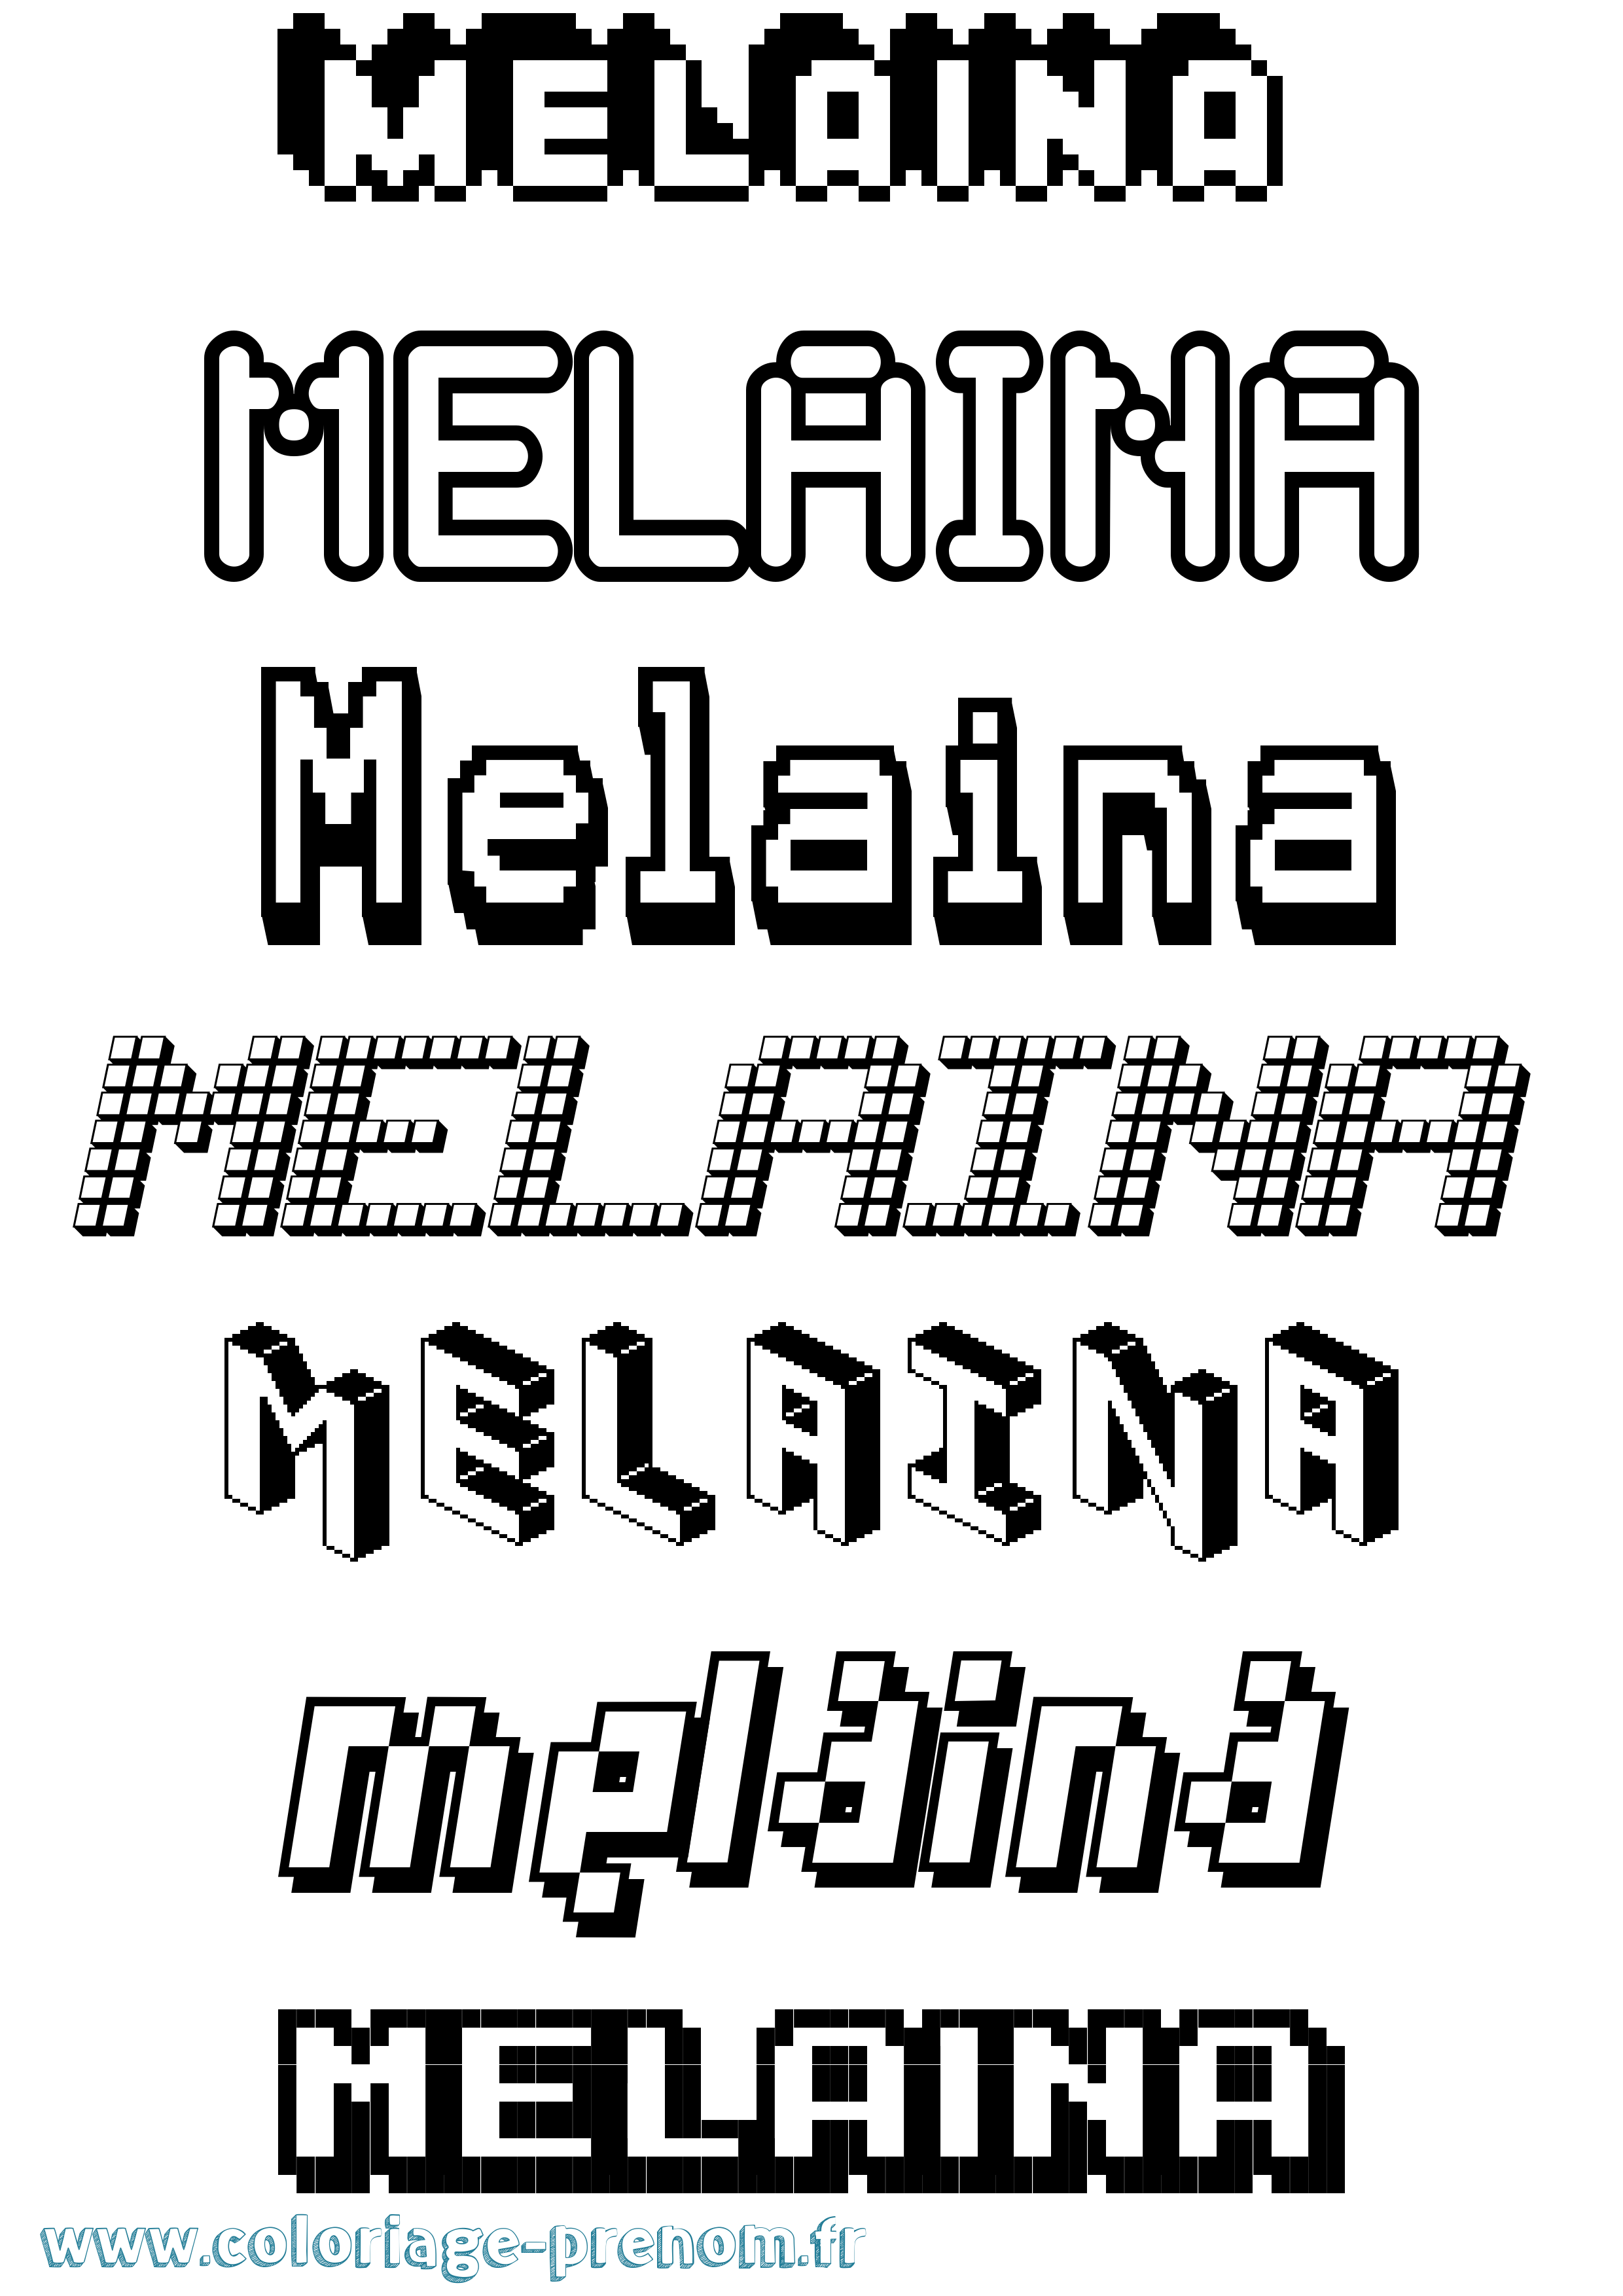 Coloriage prénom Melaina Pixel